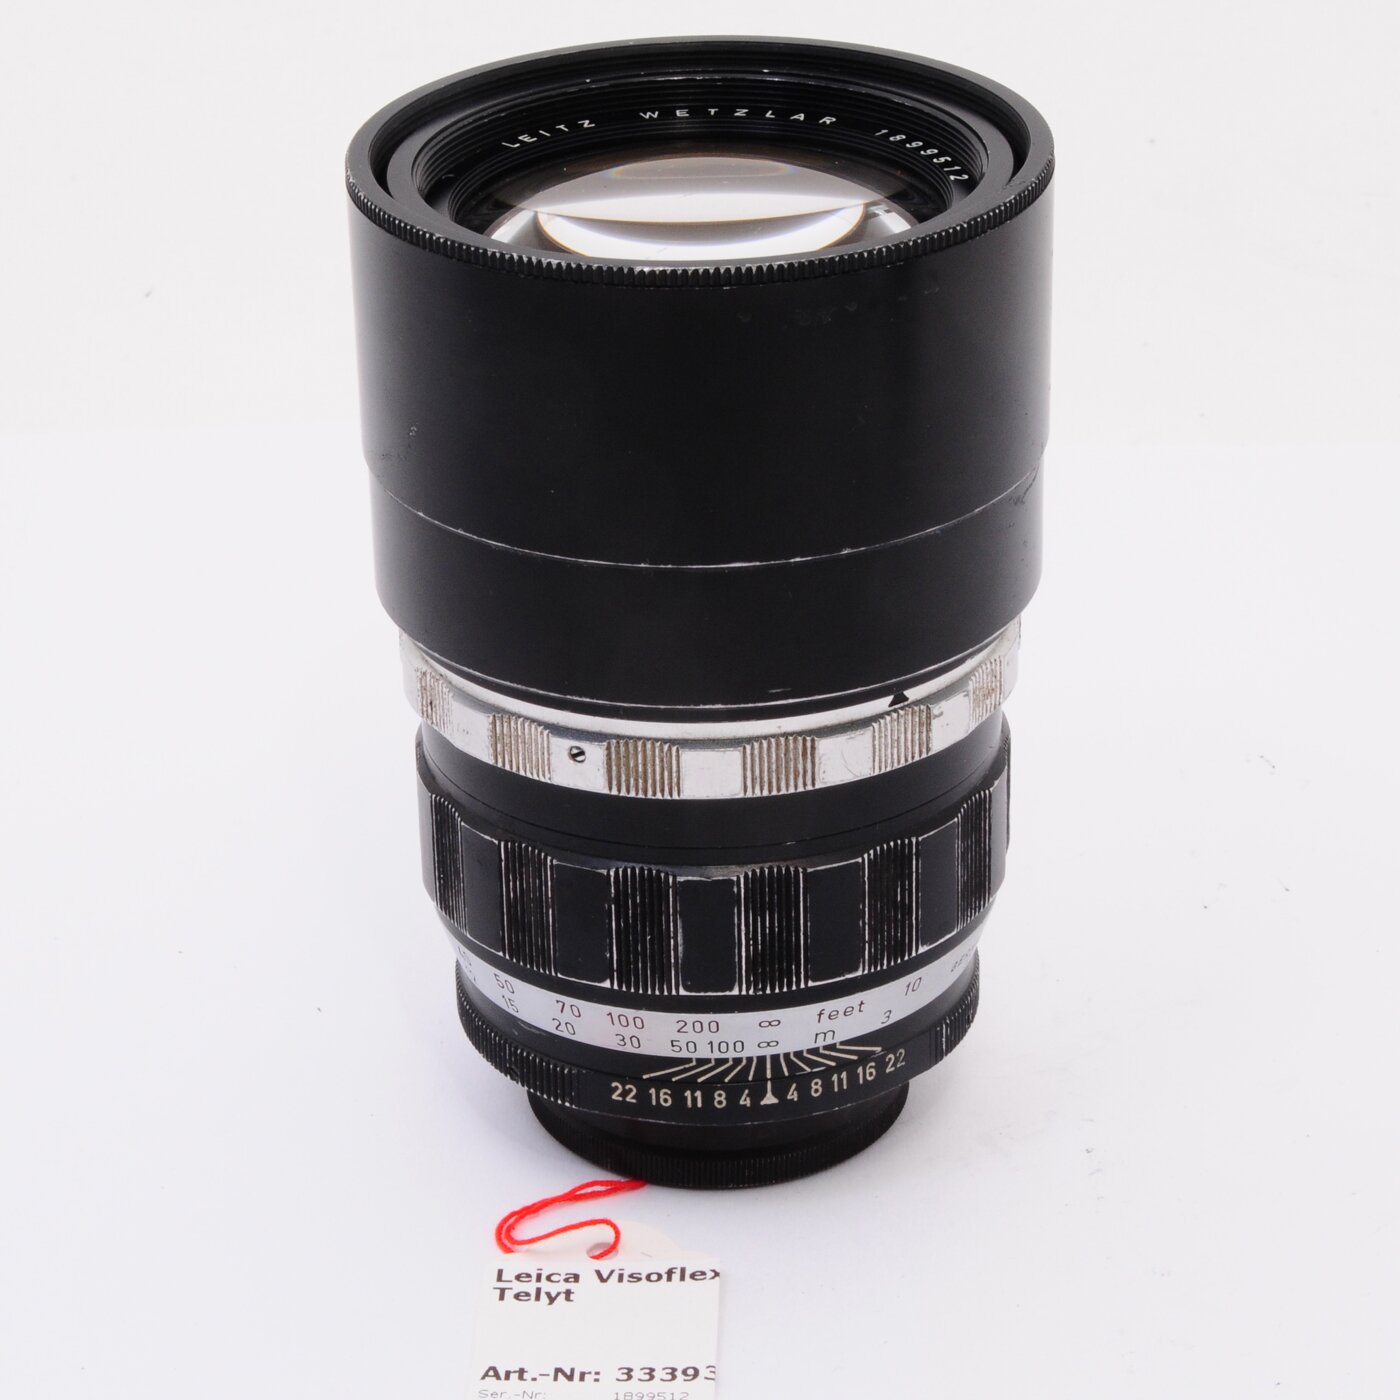 Leica Visoflex 200mm 1:4 Telyt